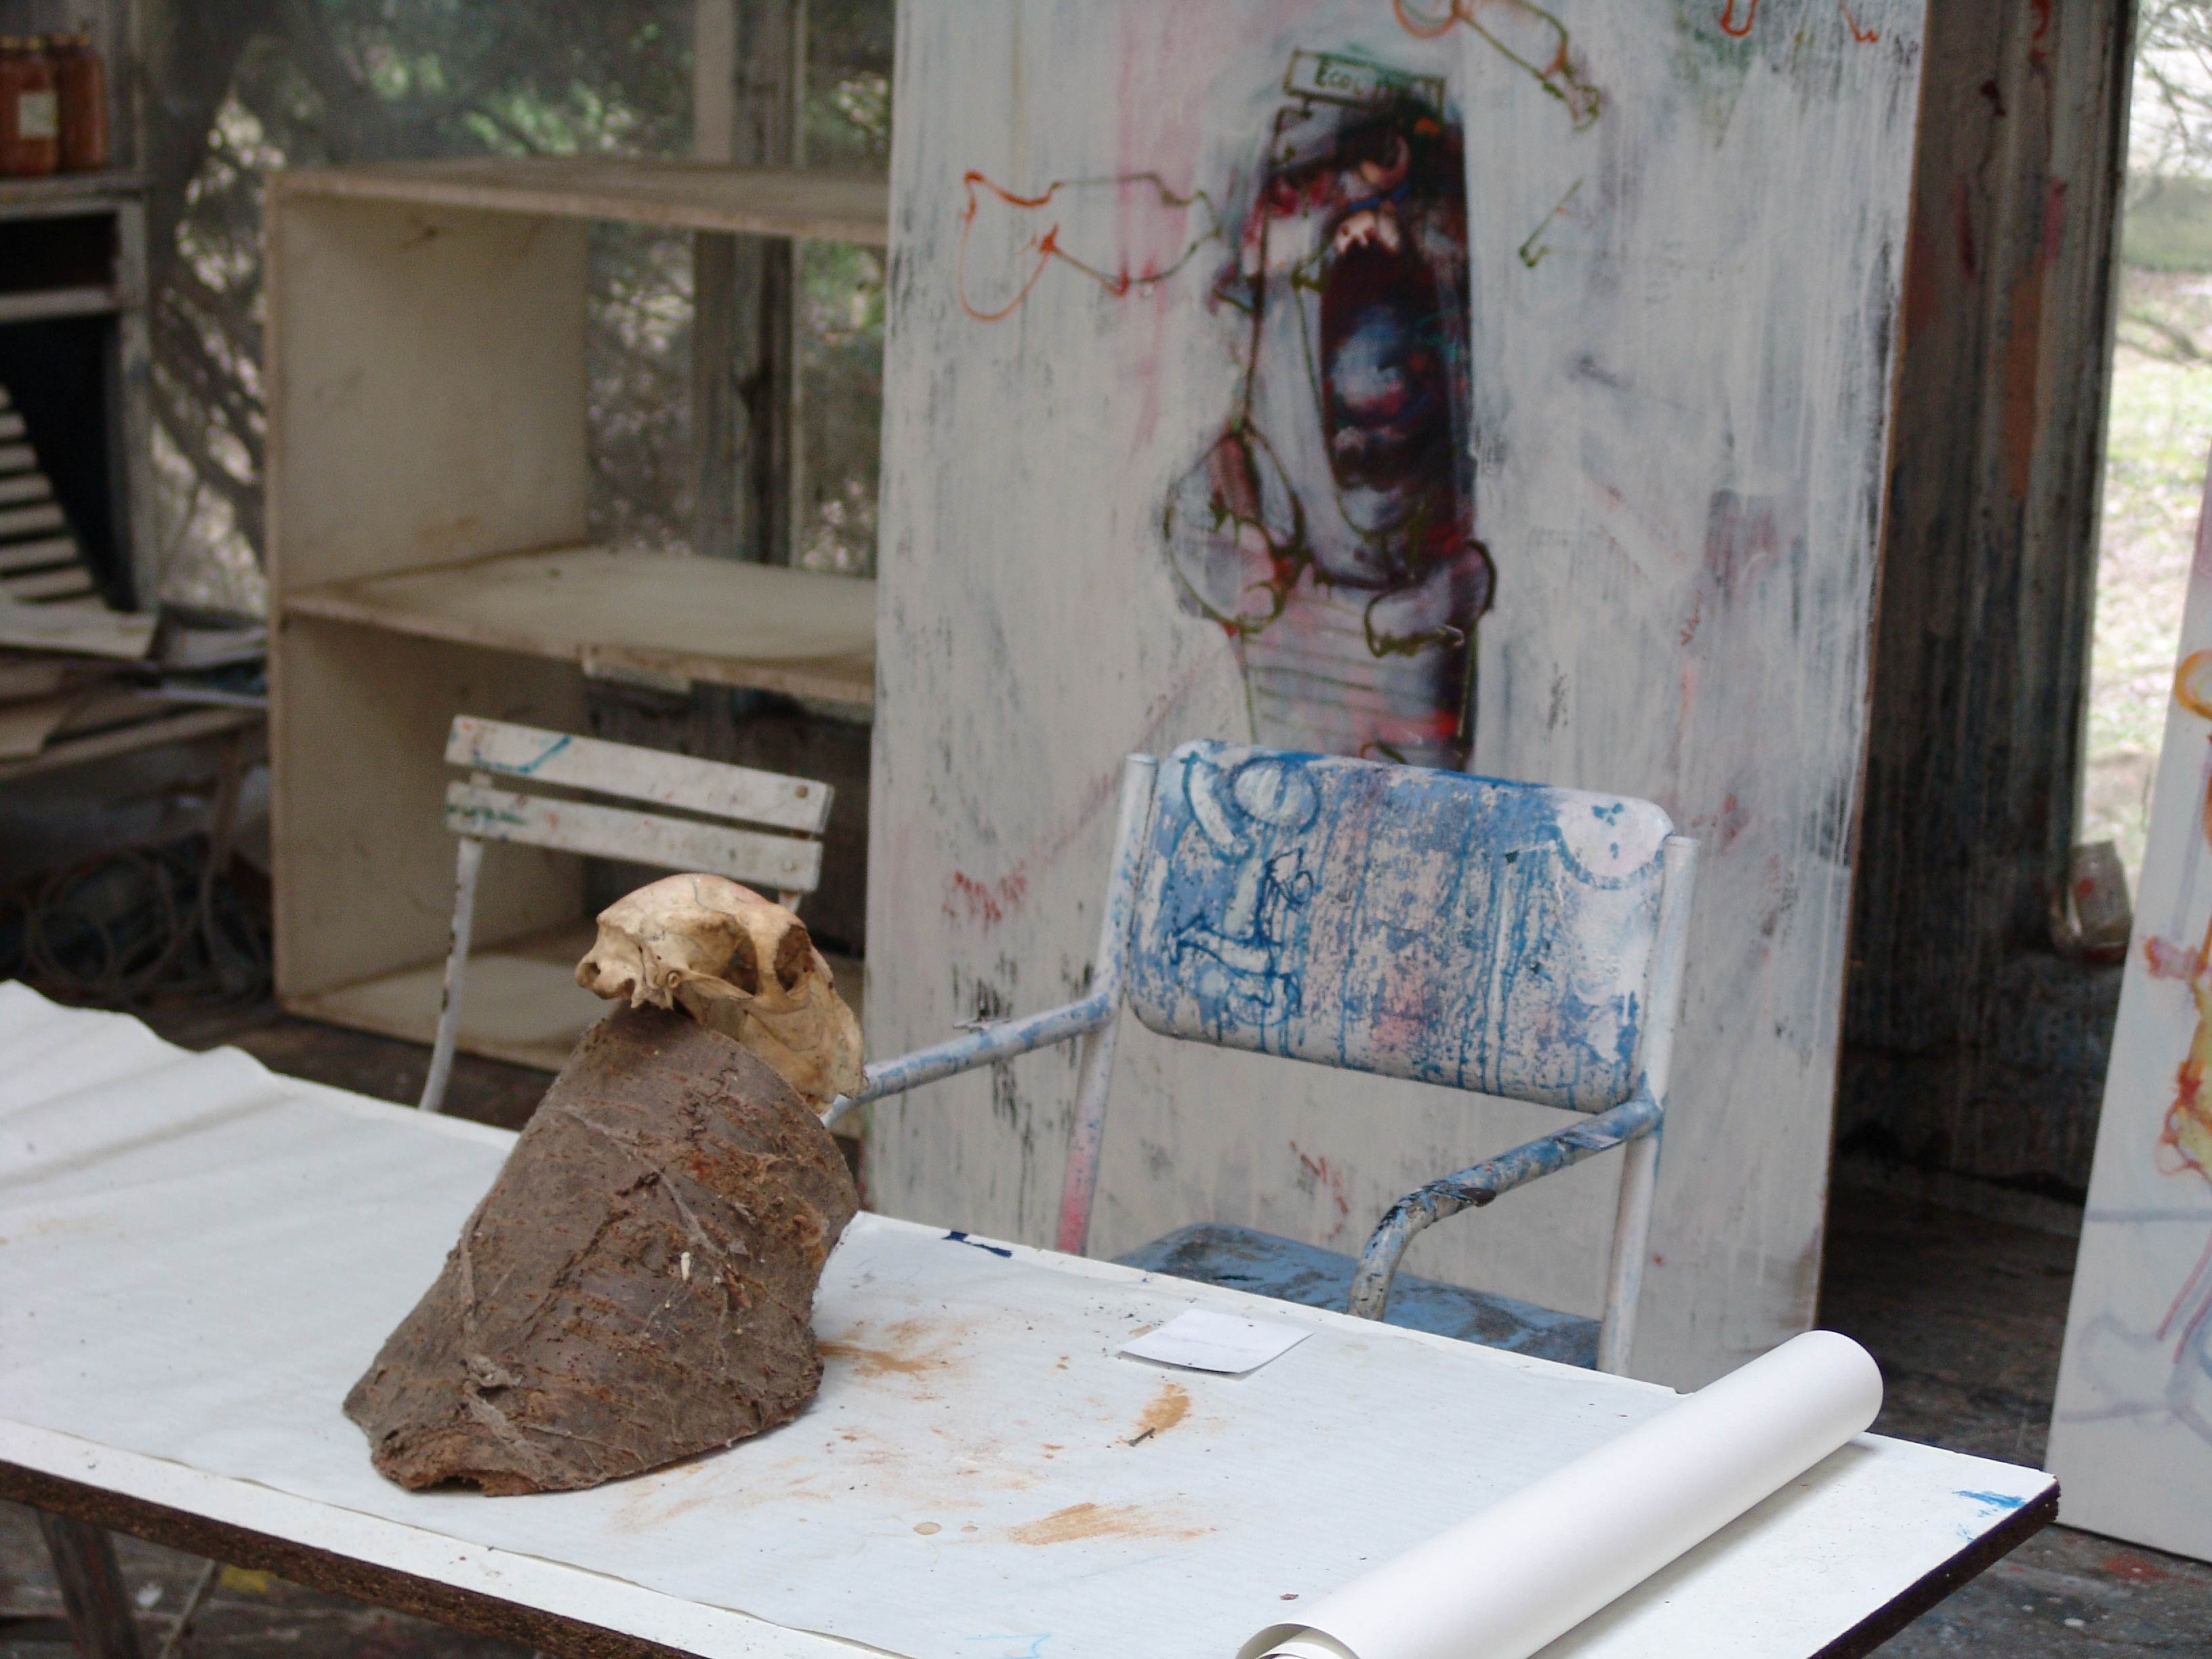 Sculptures at Dado’s studio in 2009